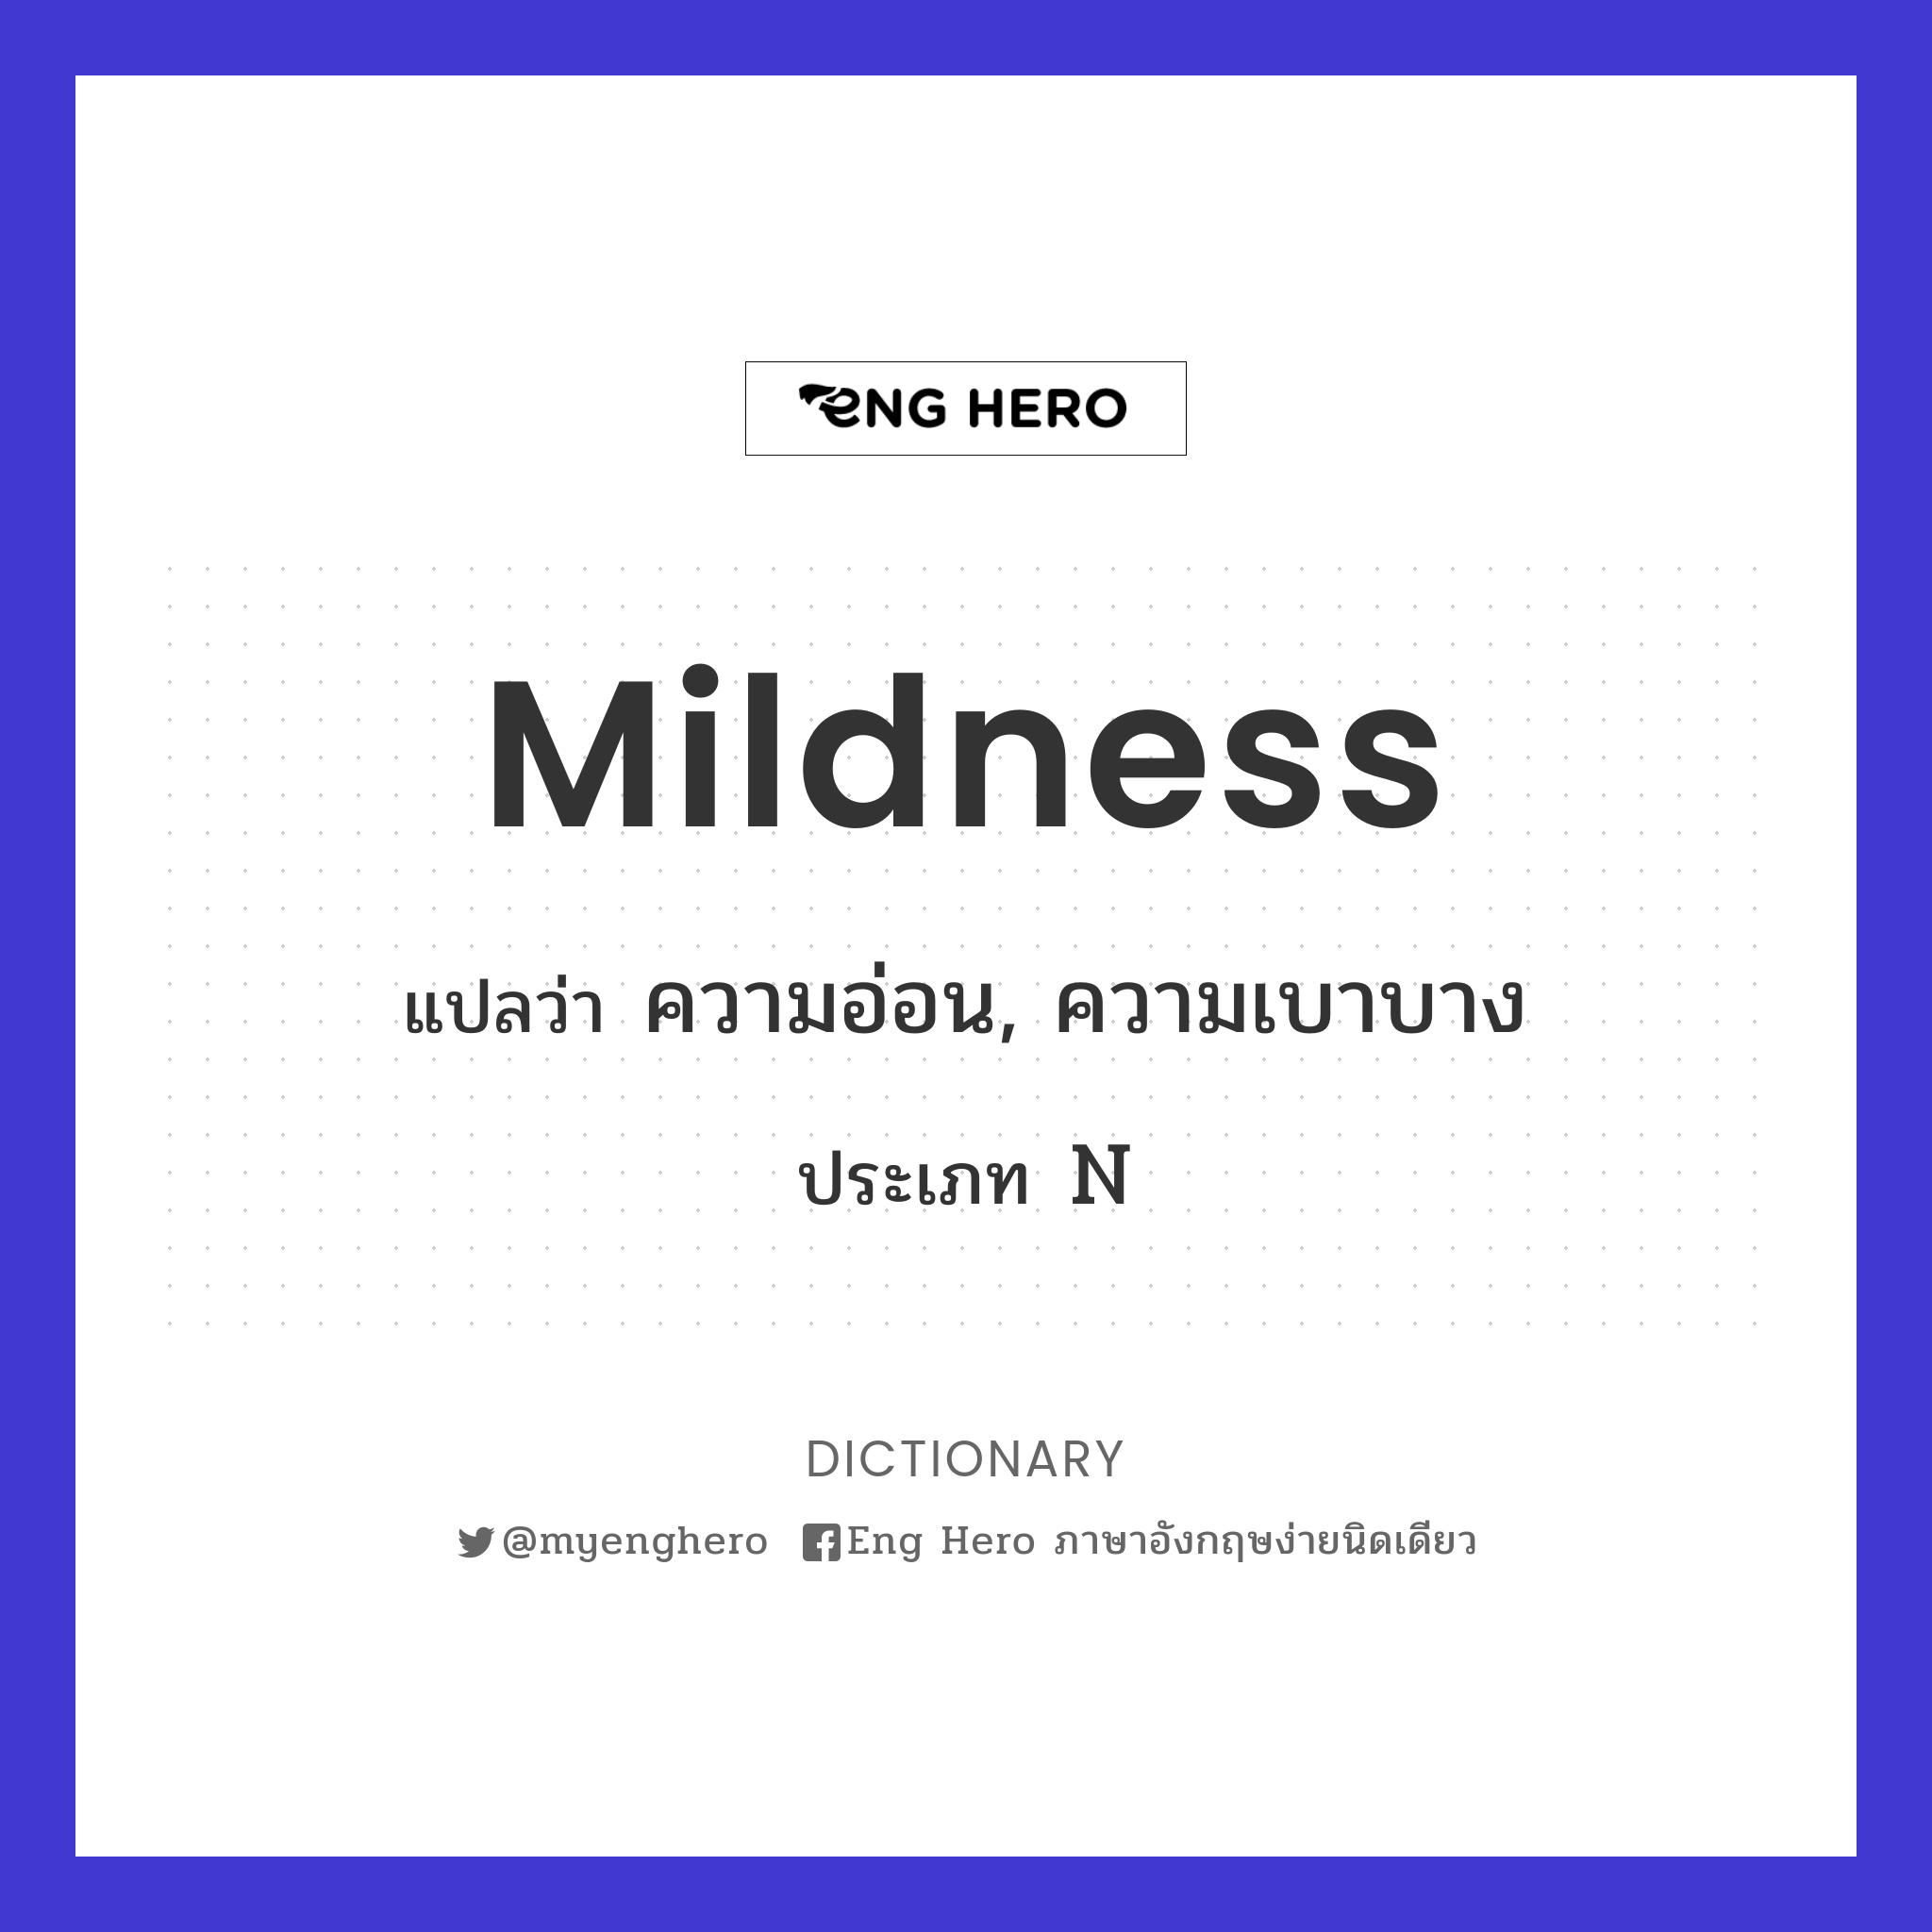 mildness